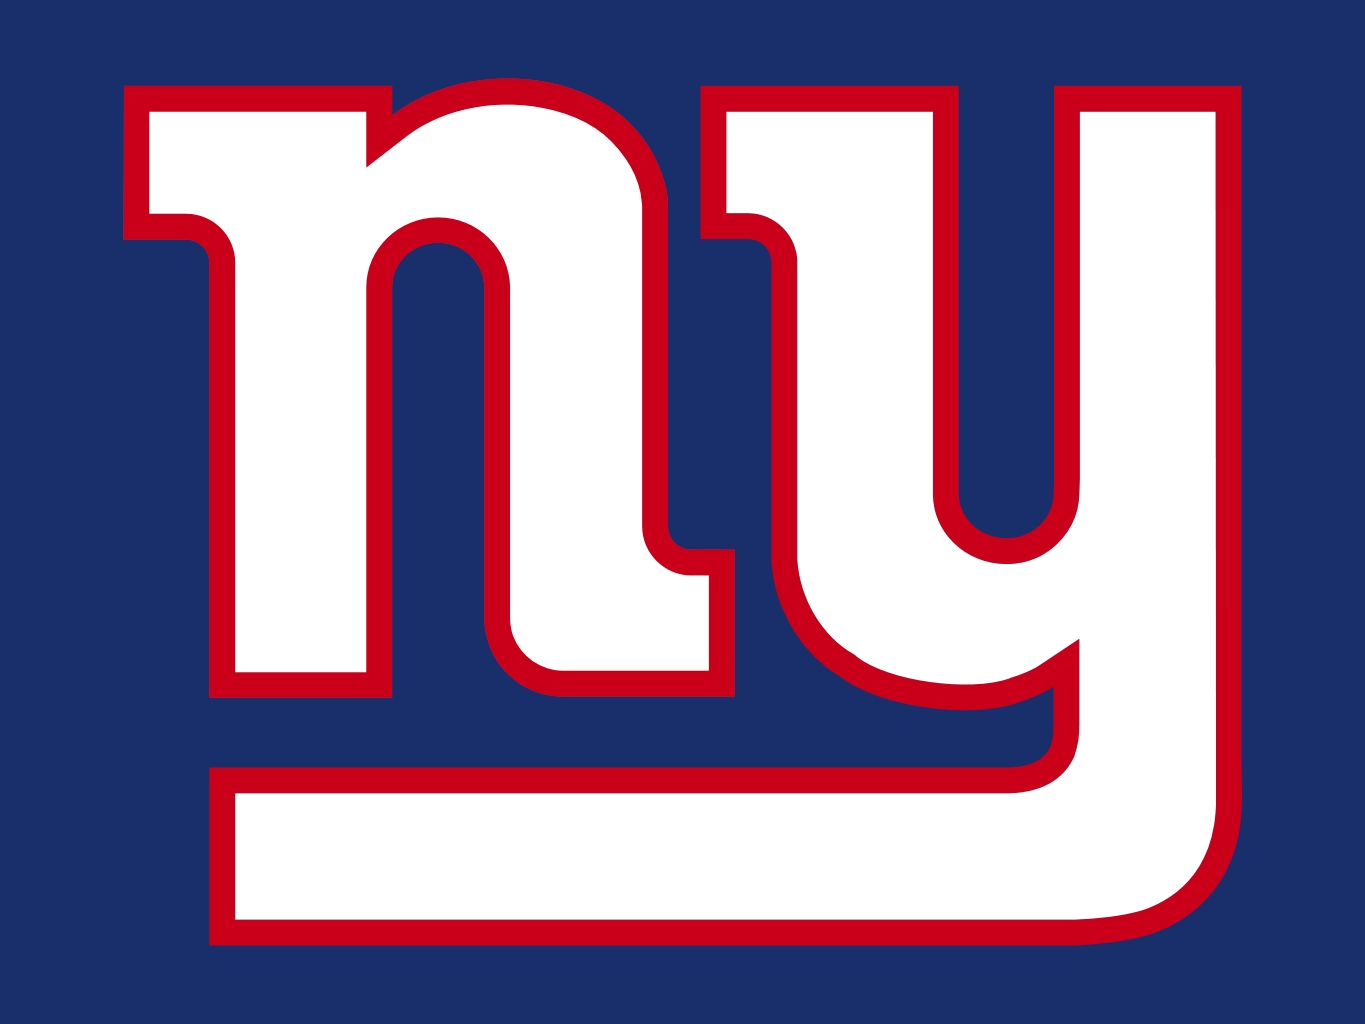 New York Giants - Pro Sports Teams Wiki